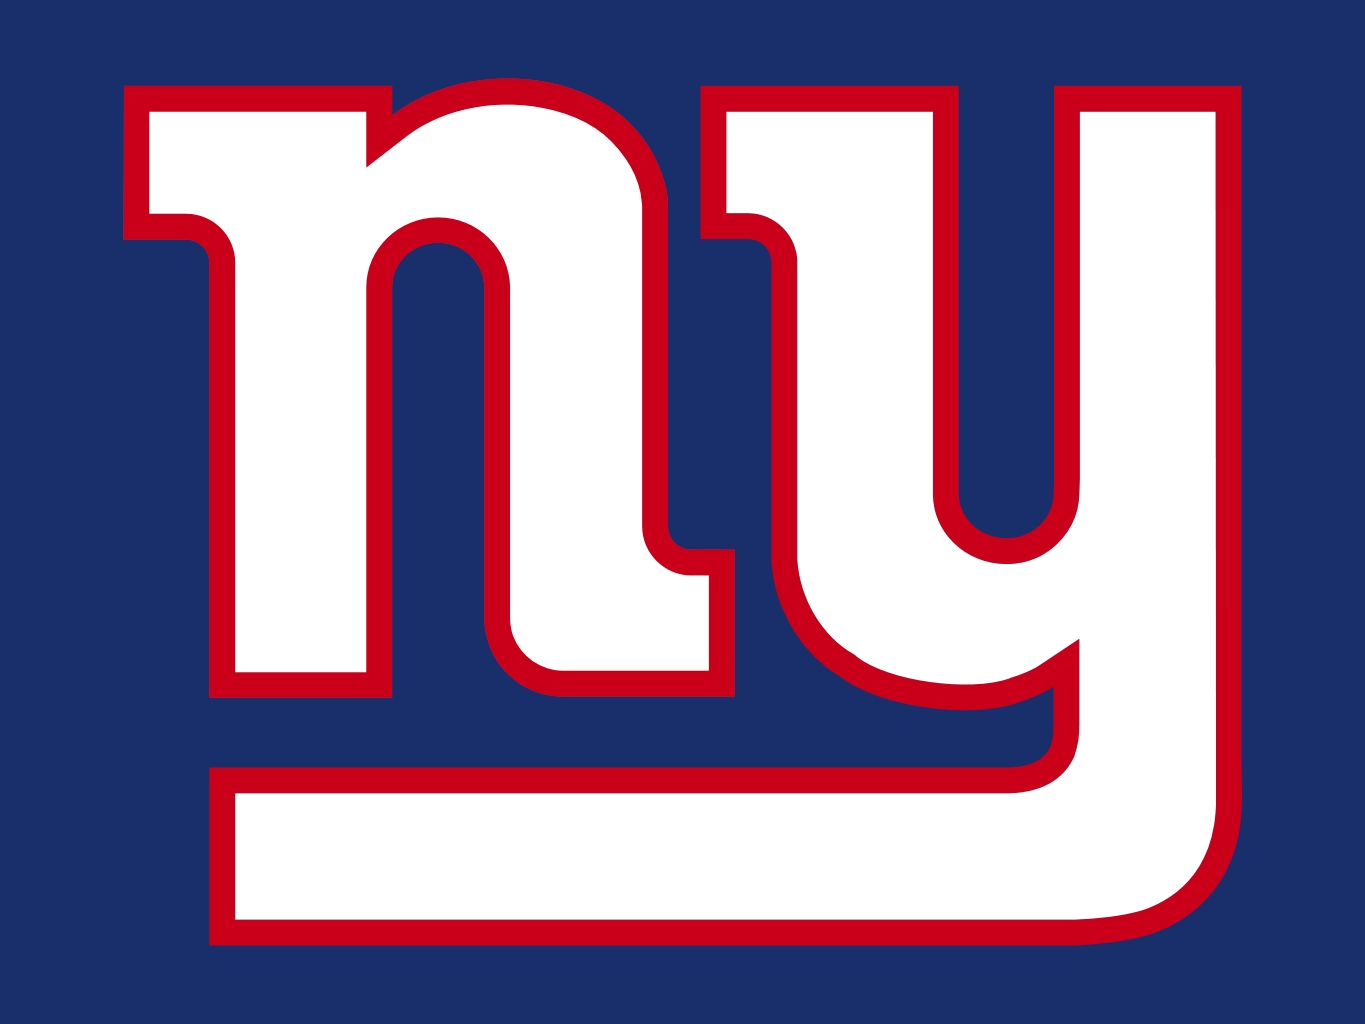 New York Giants - Pro Sports Teams Wiki